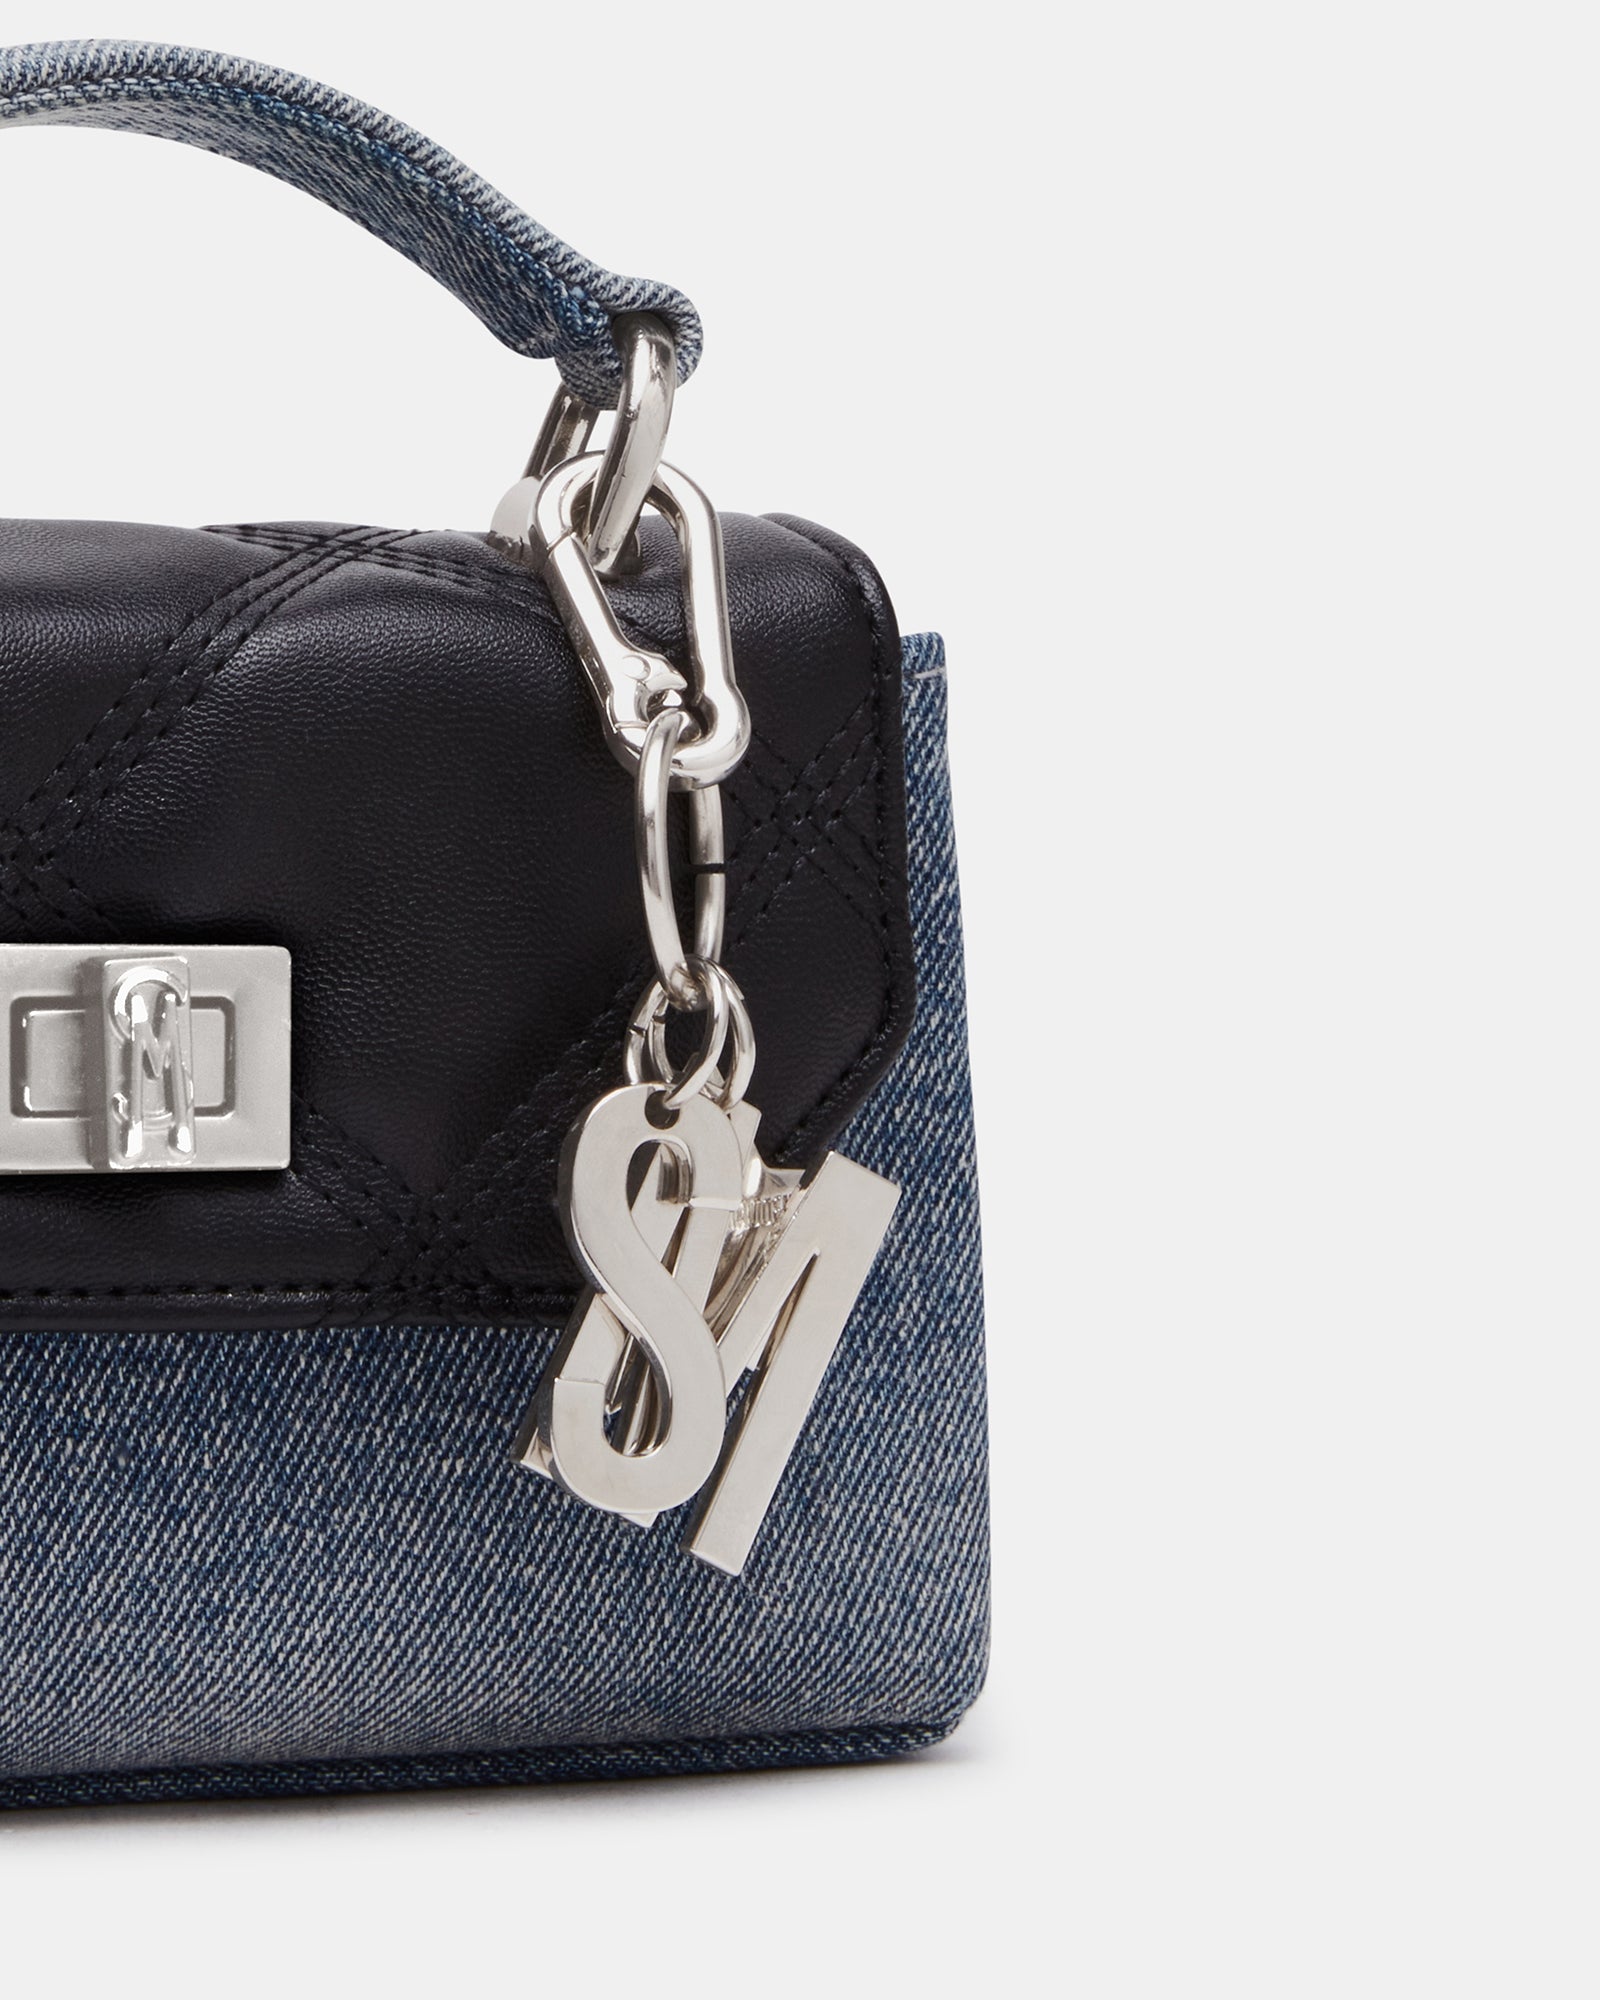 SYMONE Bag Denim Fabric | Women's Top Handle Mini Bag – Steve Madden